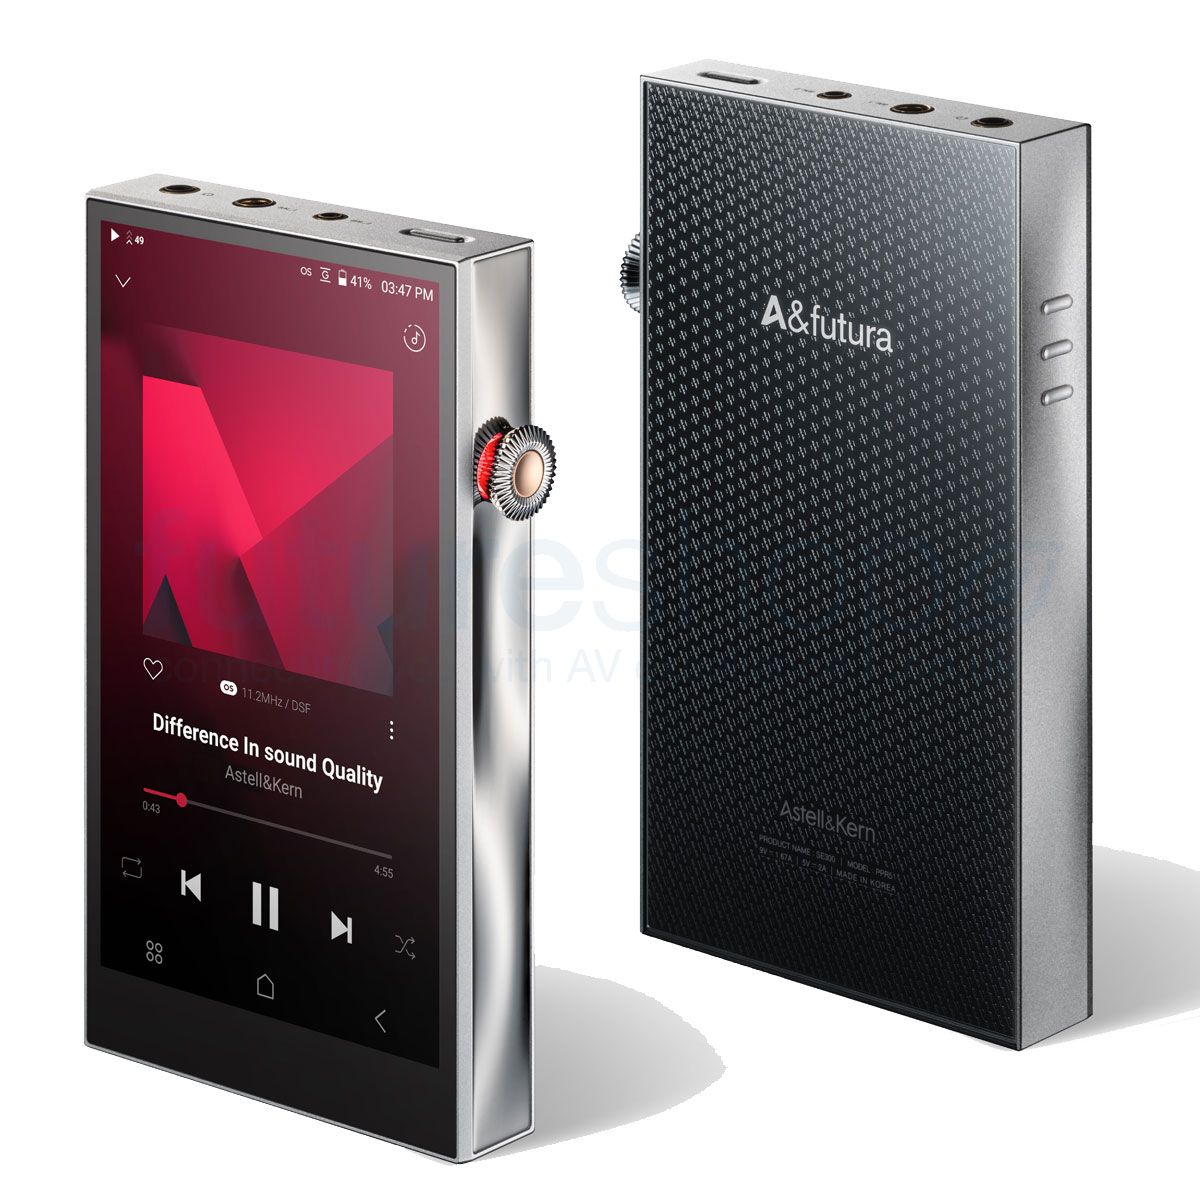 Astell&Kern A&futura SE300 Digital Audio Player